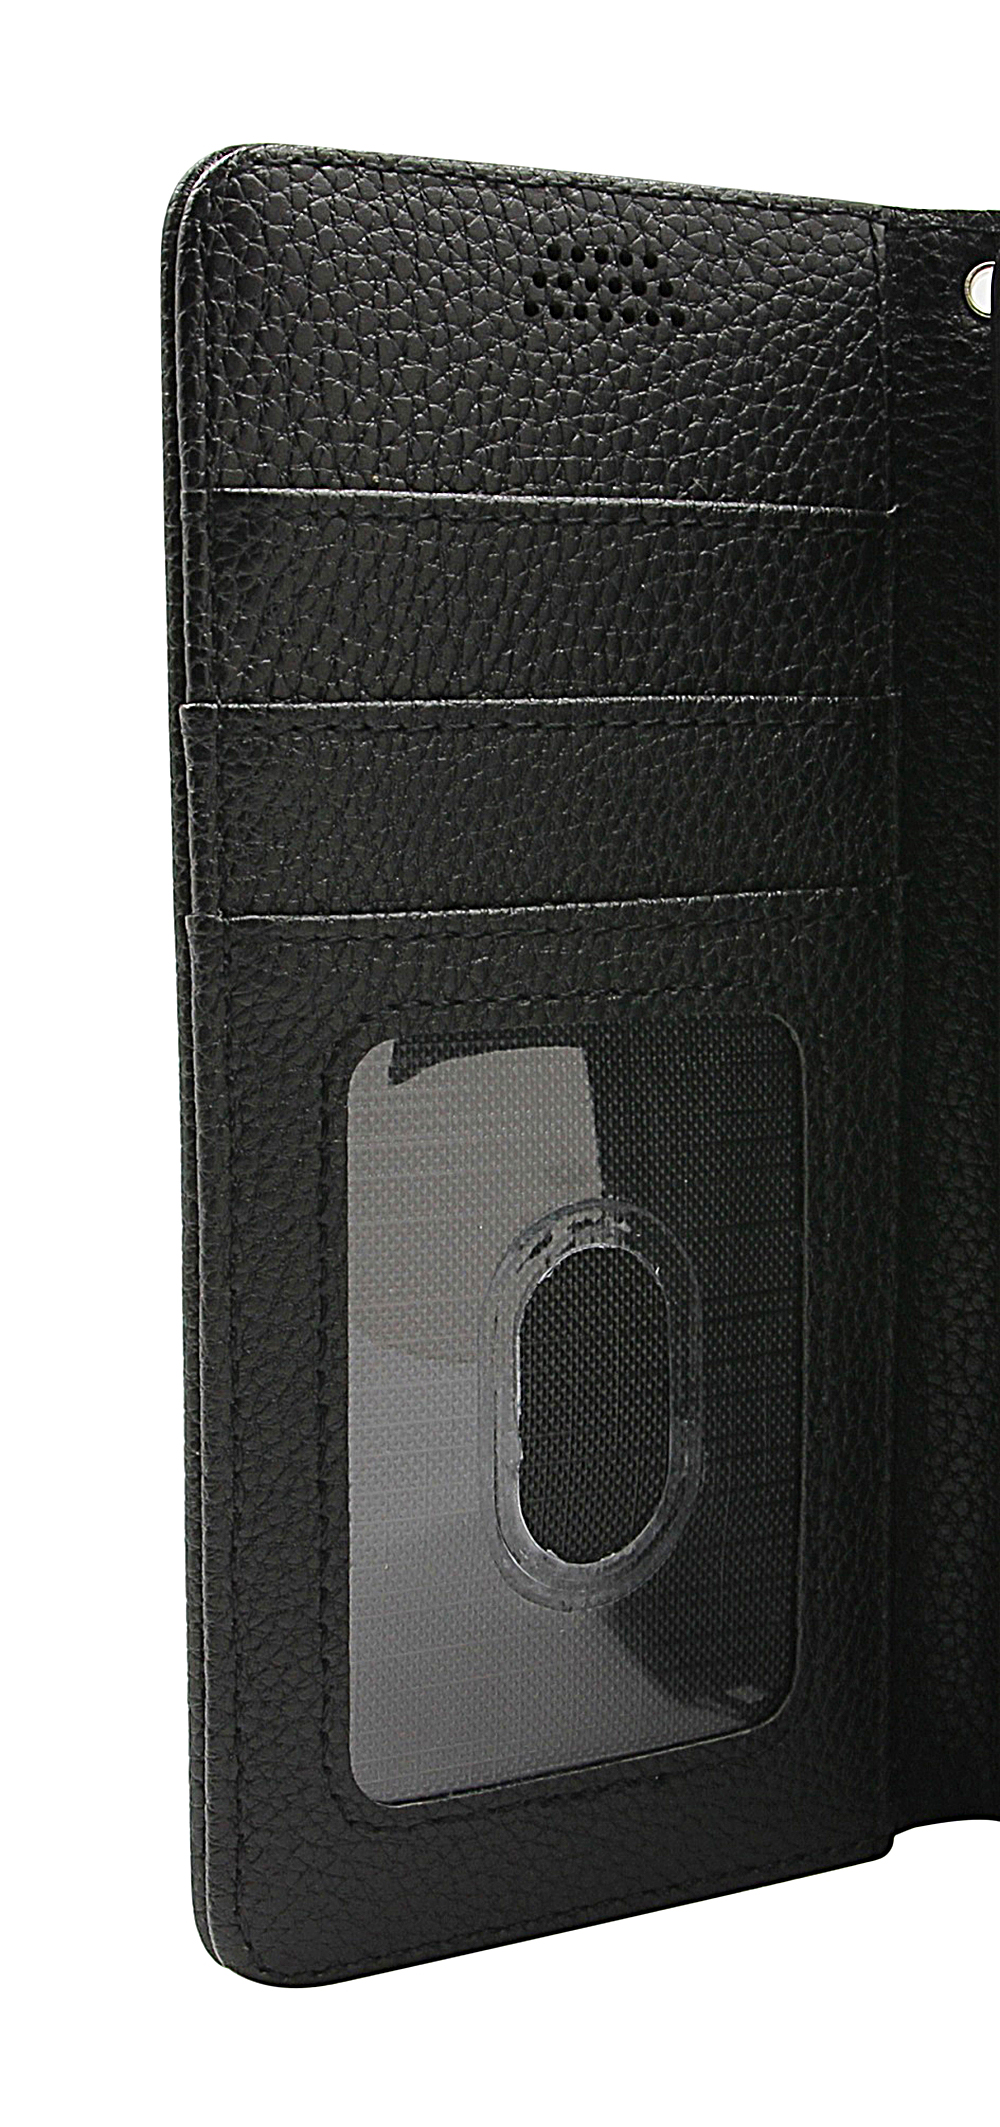 New Standcase Wallet Nokia 5.3